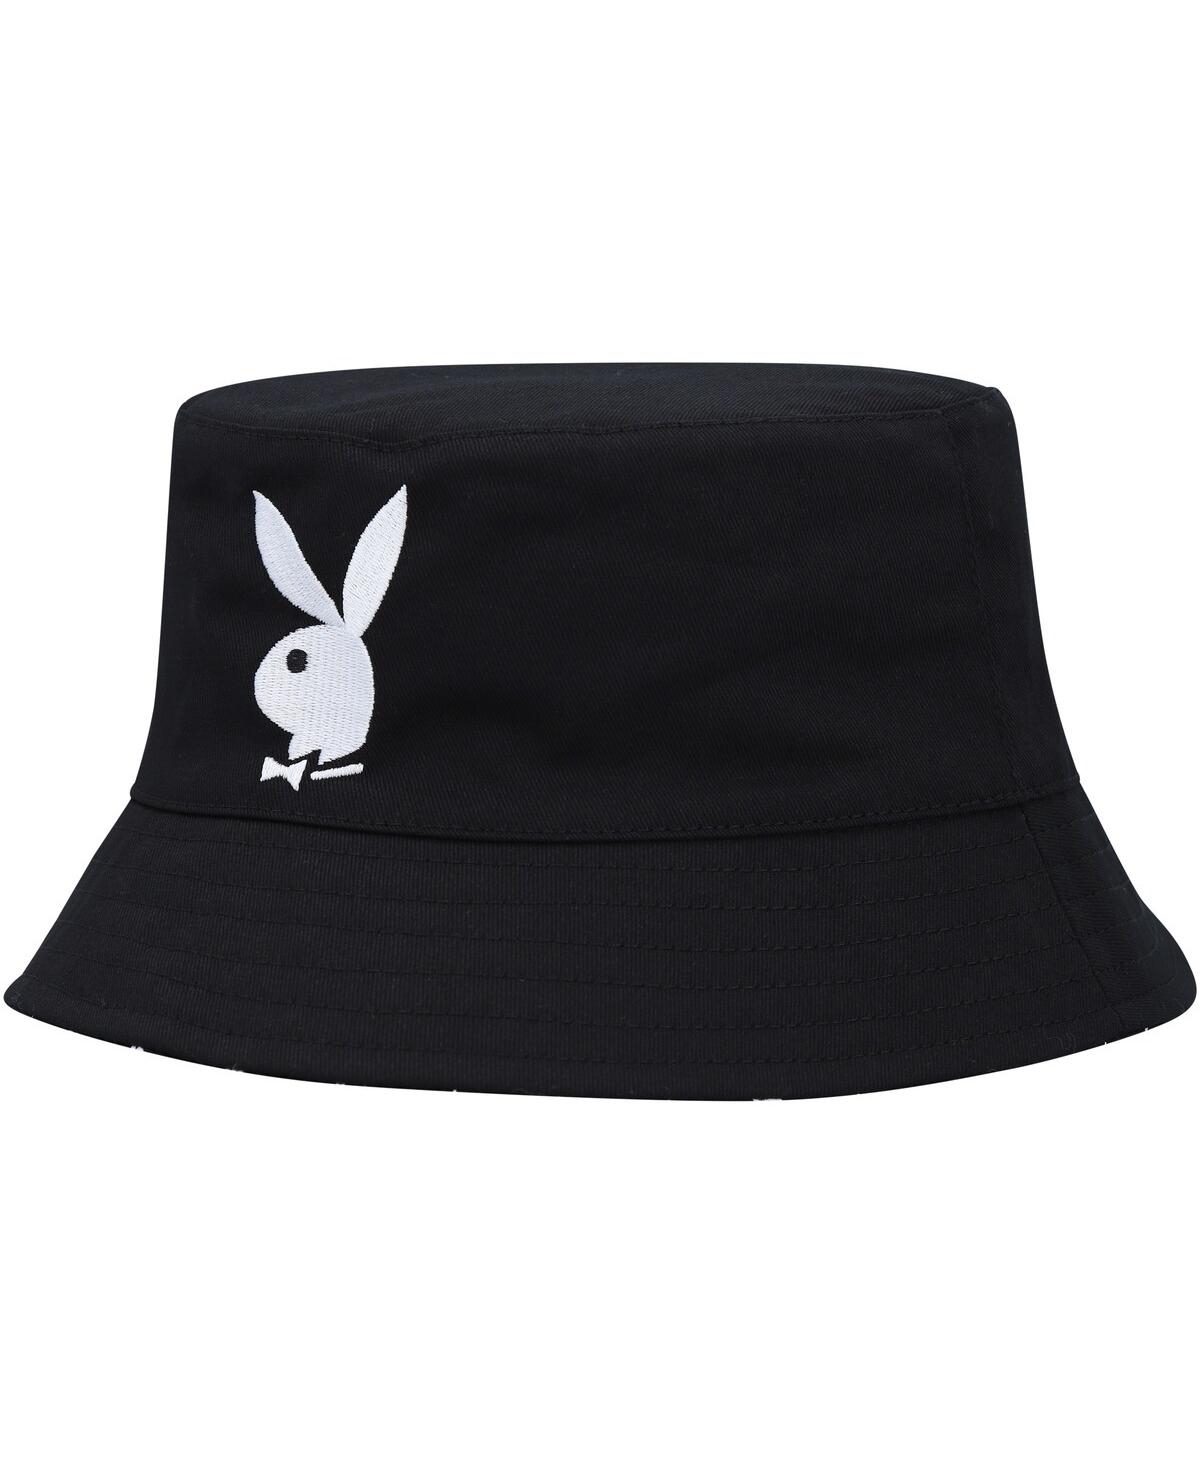 Men's Playboy Black Reversible Bucket Hat - Black